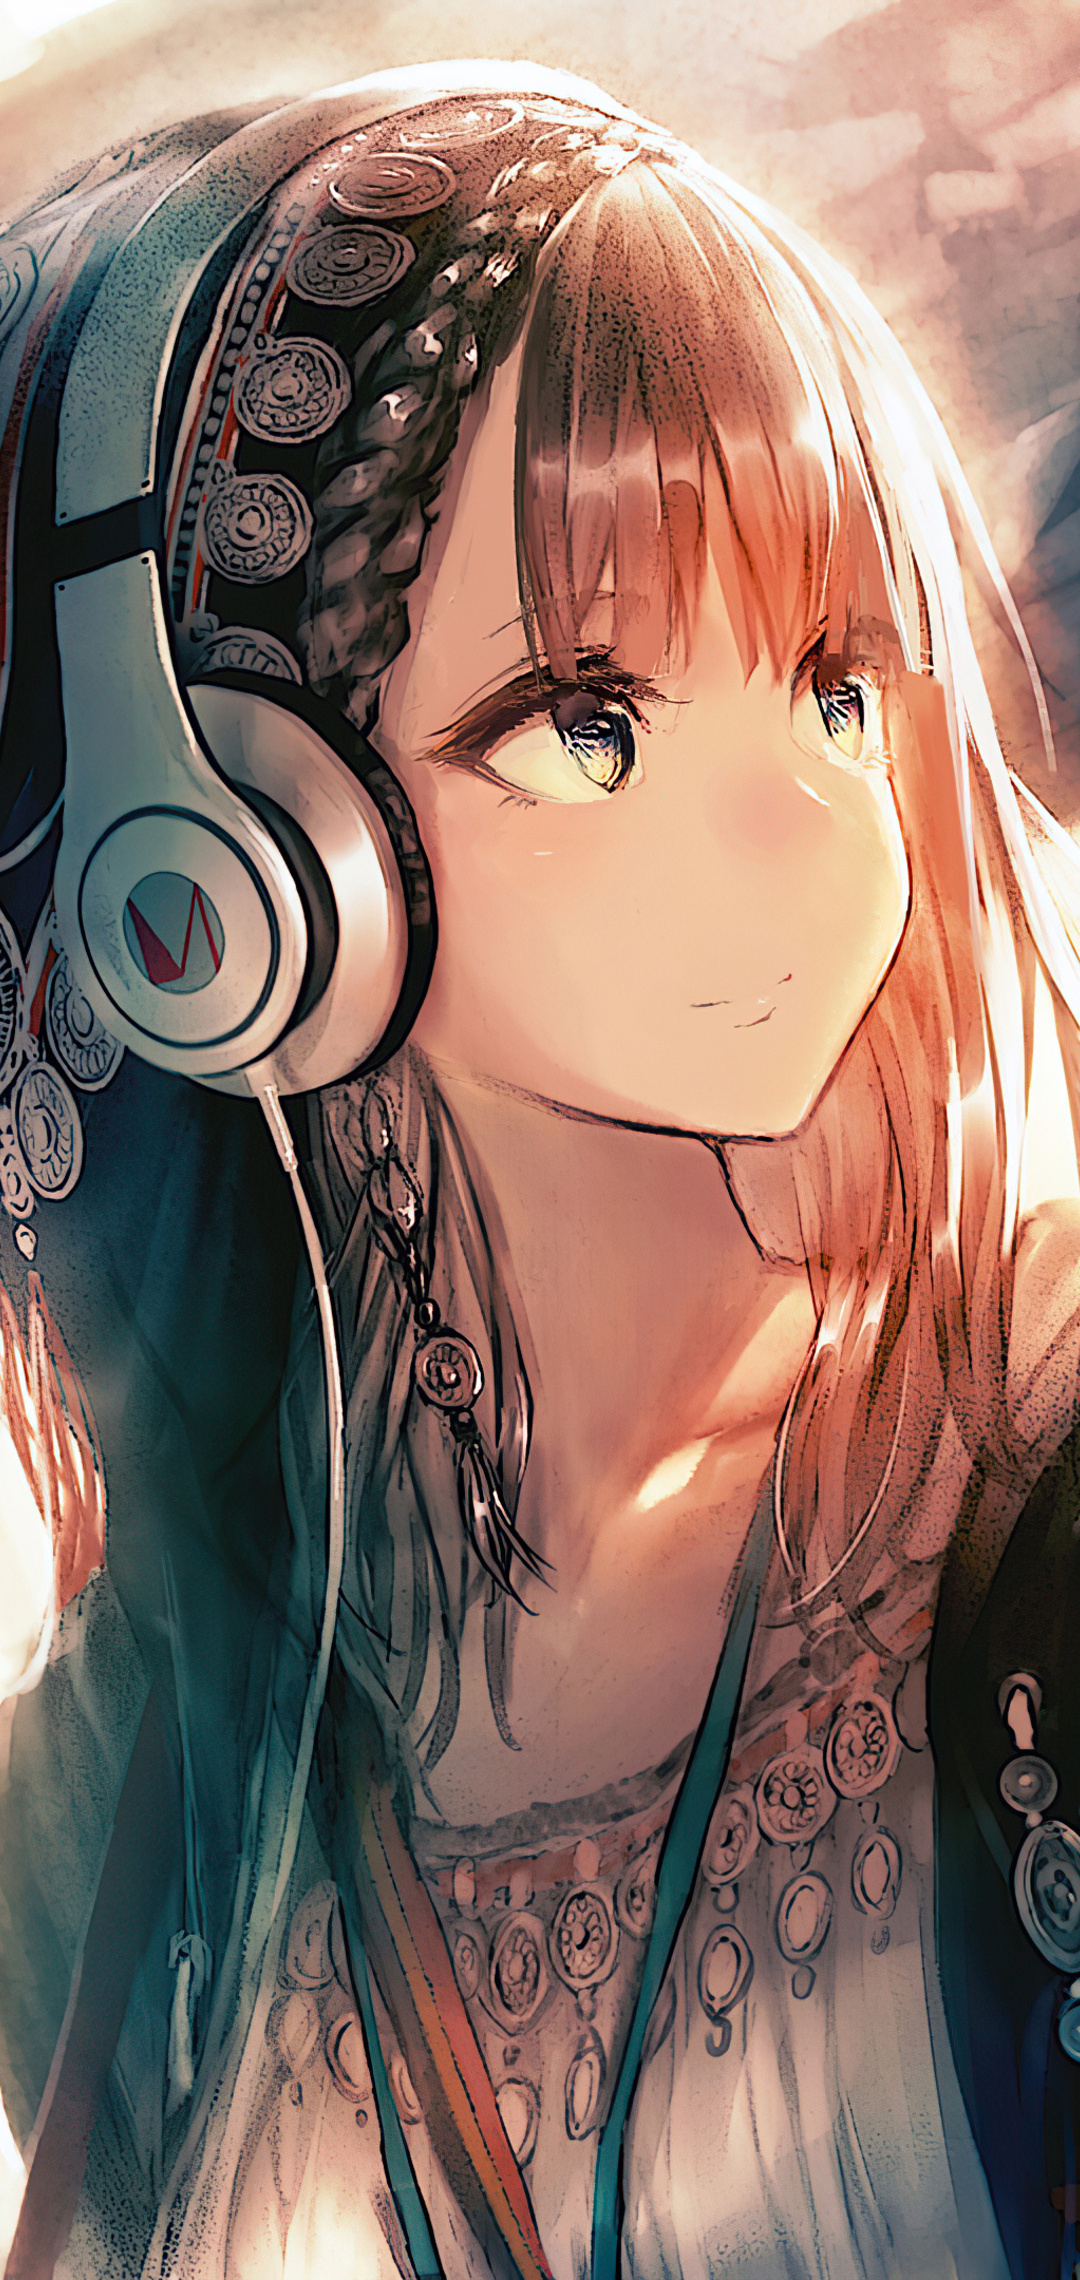 1080x2280 Anime Girl Headphones Looking Away 4k One Plus 6,Huawei p20